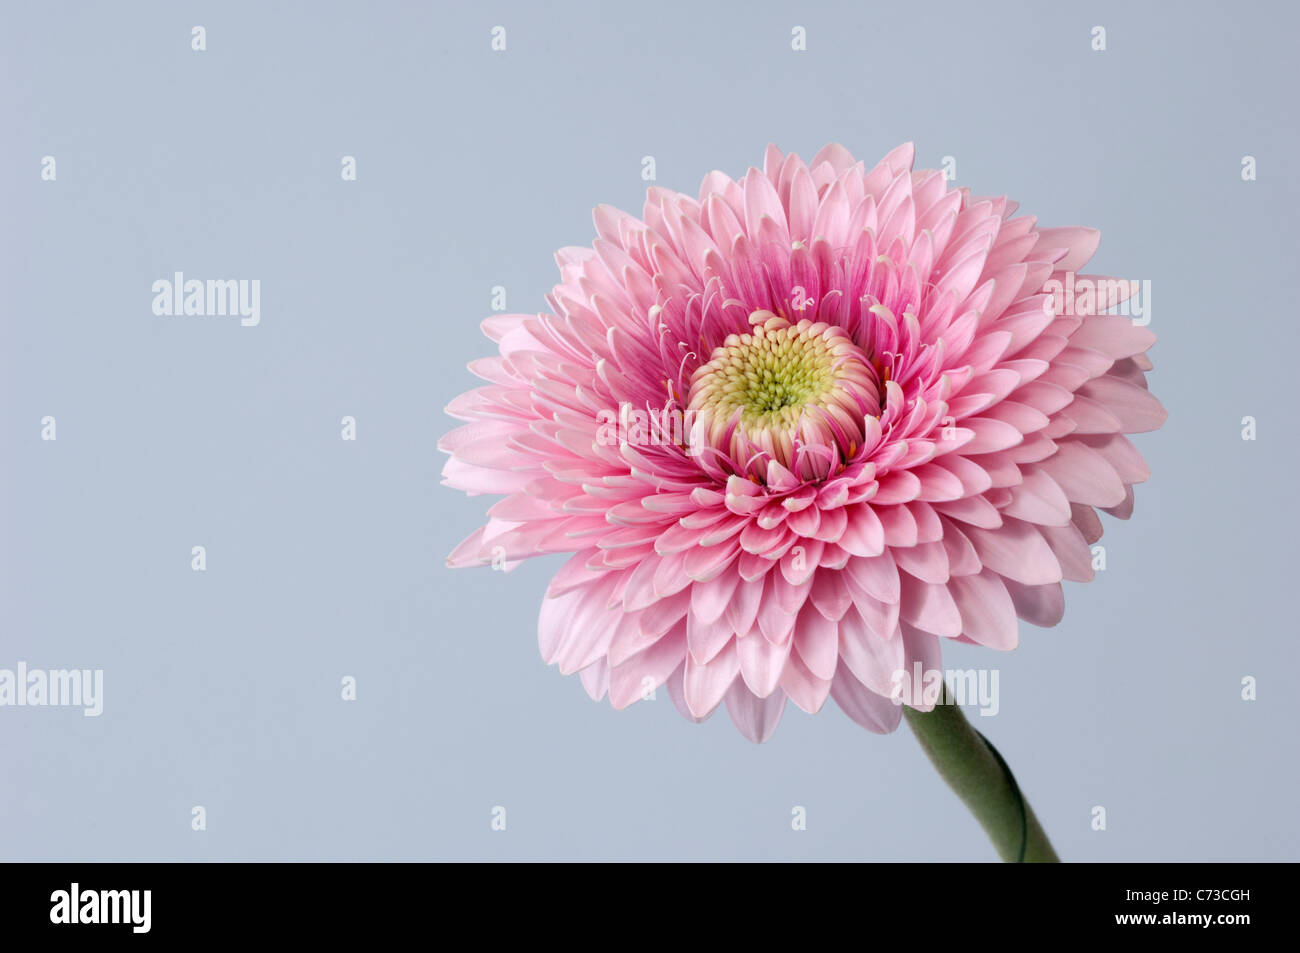 Barberton Daisy, Gerbera, Transvaal Daisy (Gerbera hybrid), pink flower. Studio picture against a gray background. Stock Photo